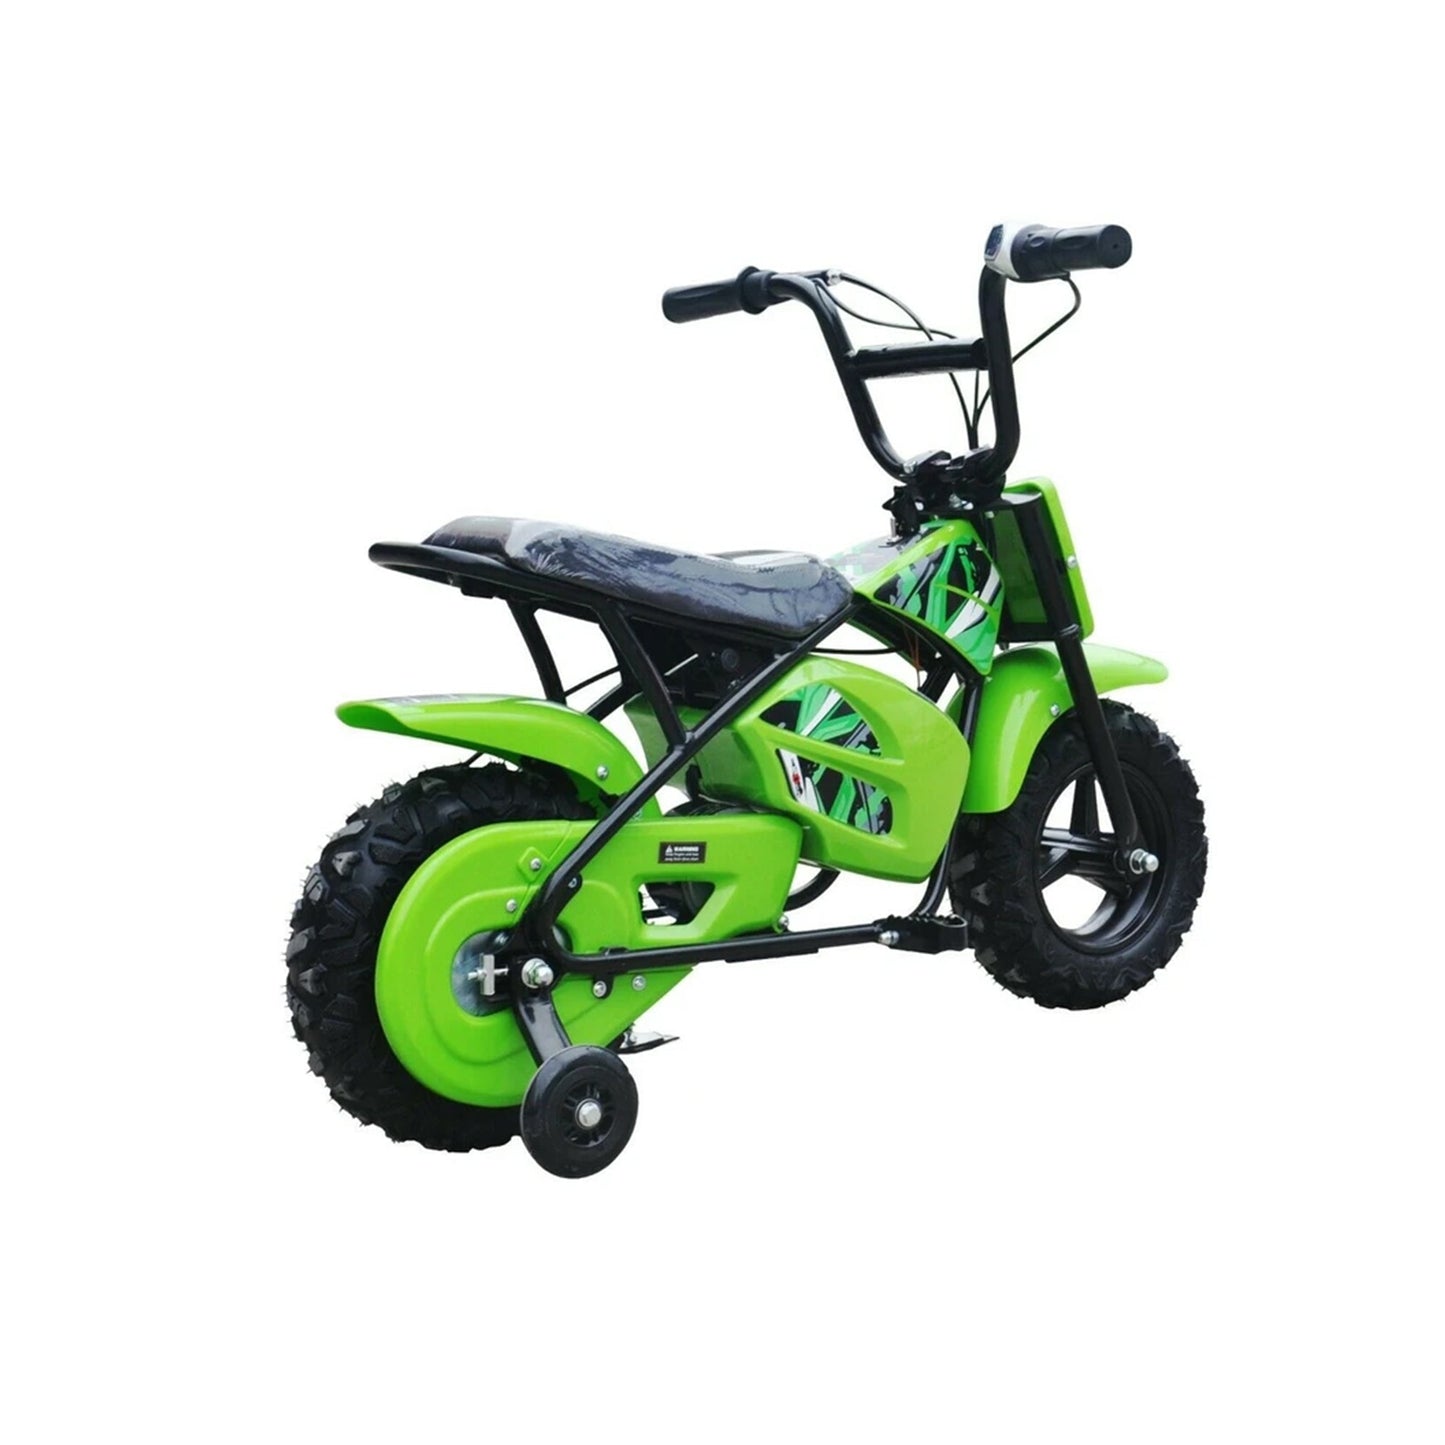 "Green Mini Dirtbike Scrambler, 250 Watt, 12 Volt Kids Electric Ride-On with a Twist and Go Throttle"